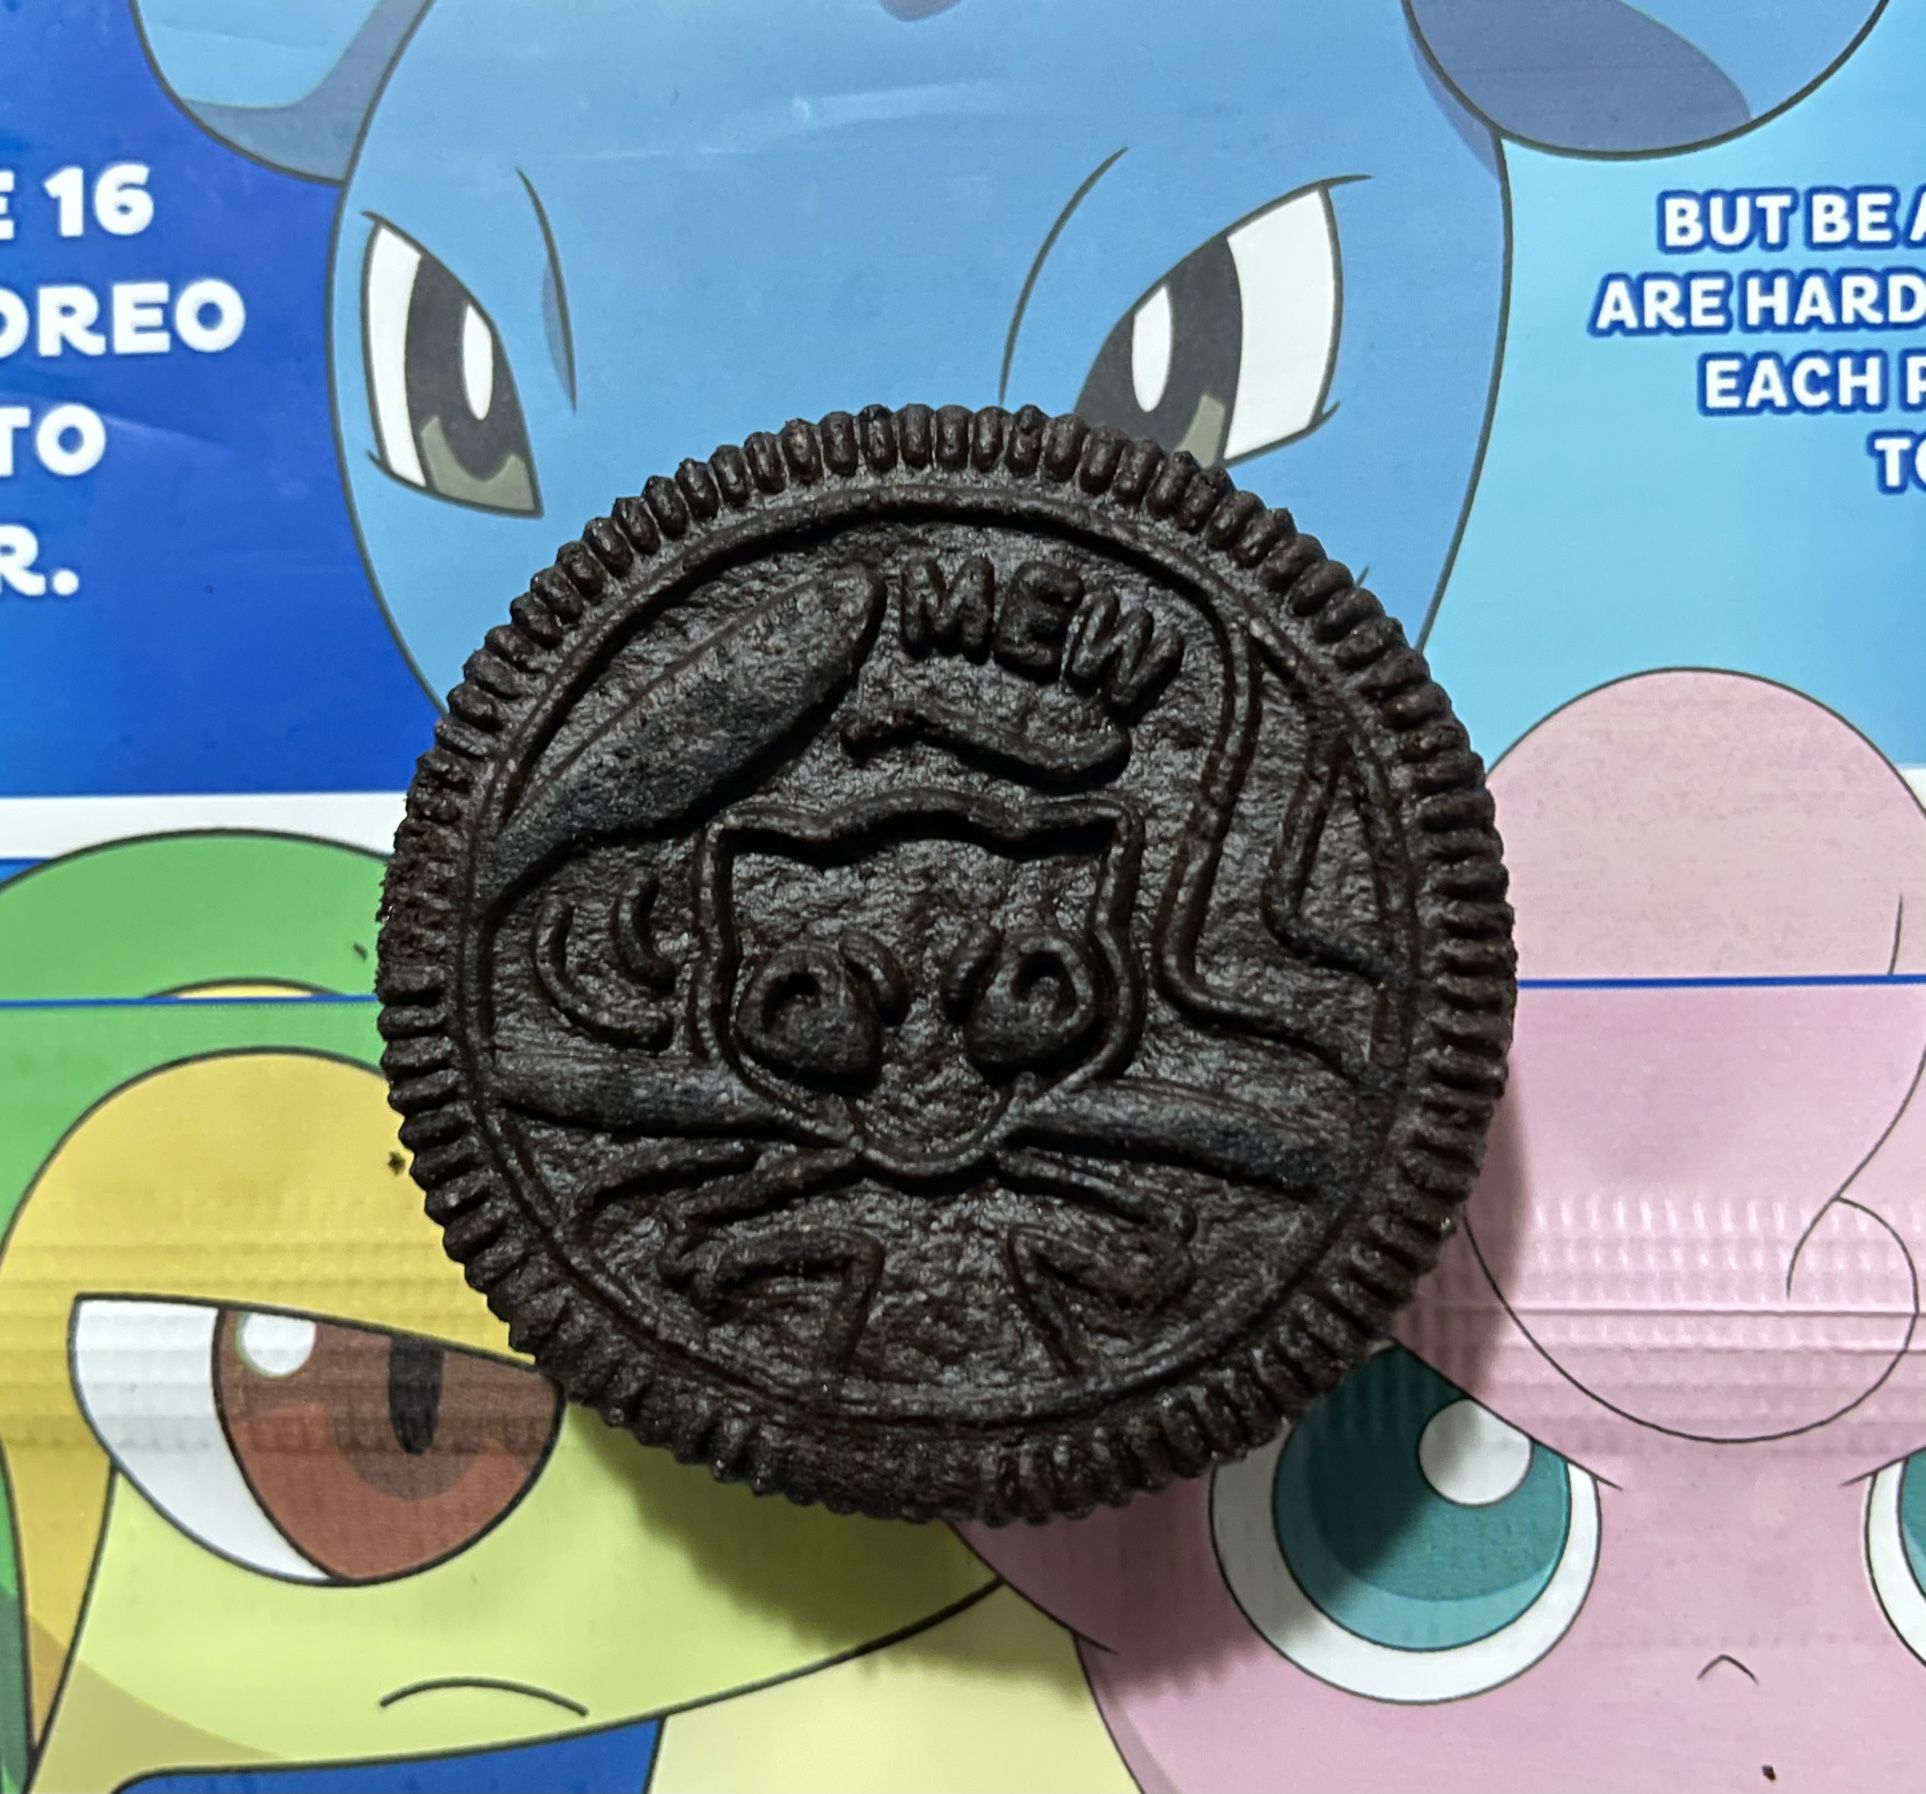 Nabisco x Pokemon Company - Mew Oreo Cookie - Super Rare!